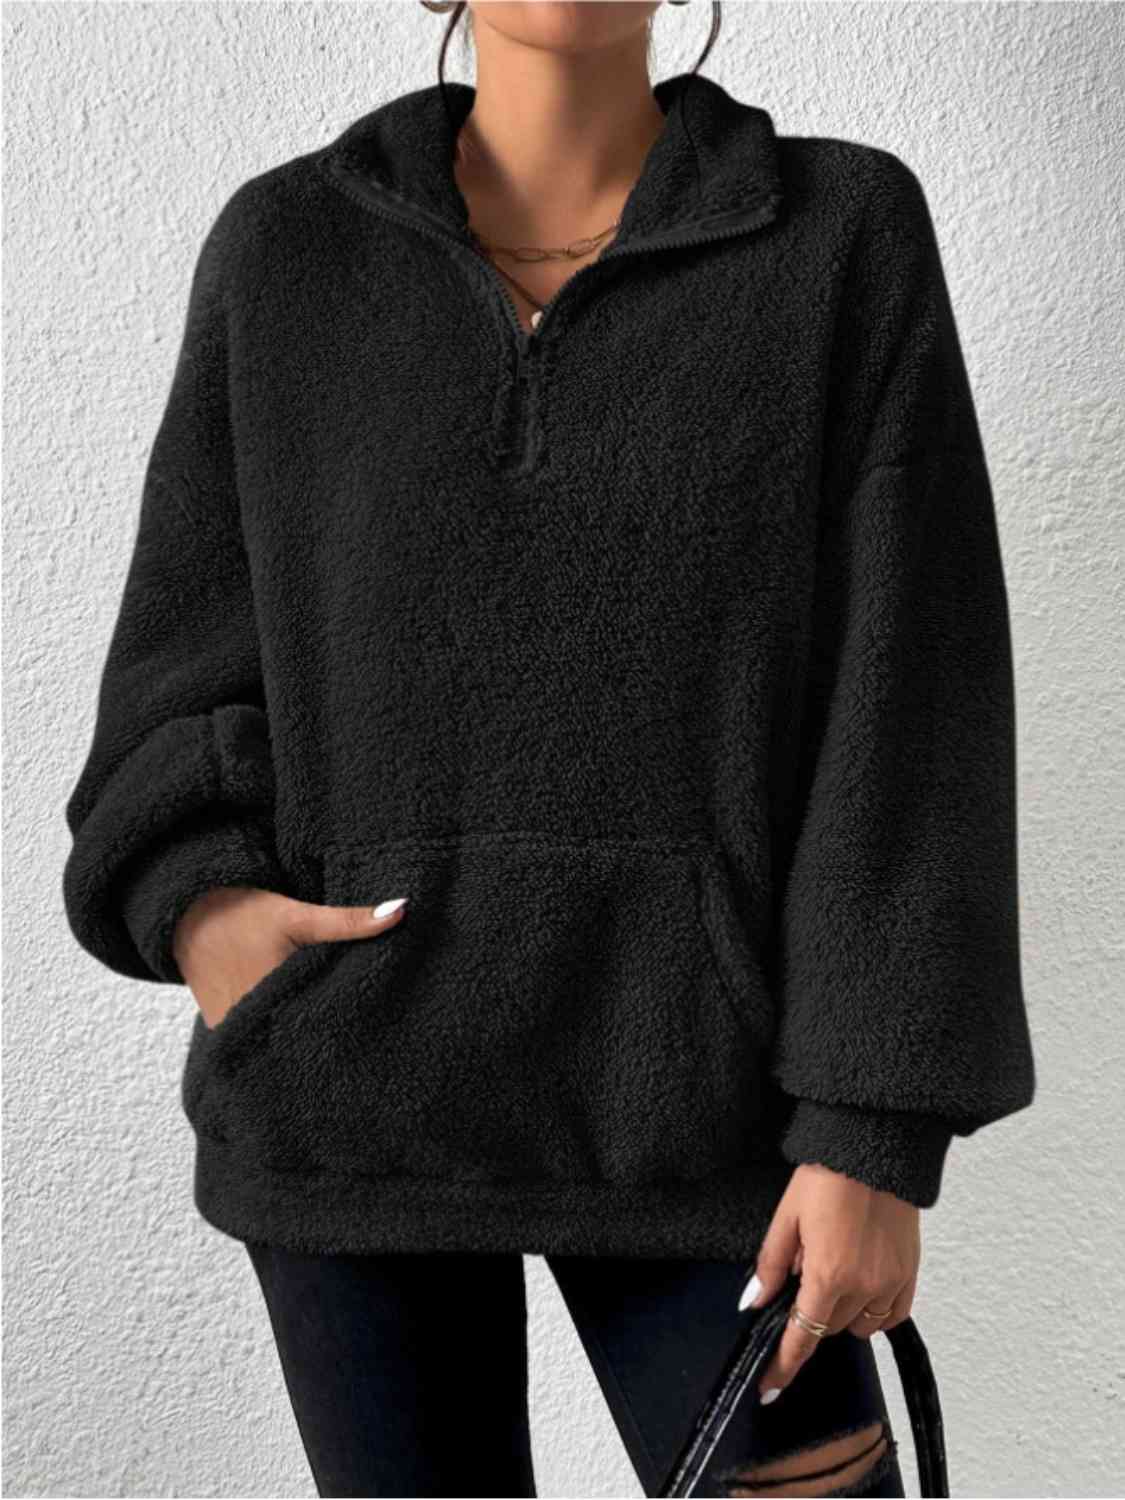 Half Zip Drop Shoulder Sweatshirt with Pocket - Fashion Girl Online Store